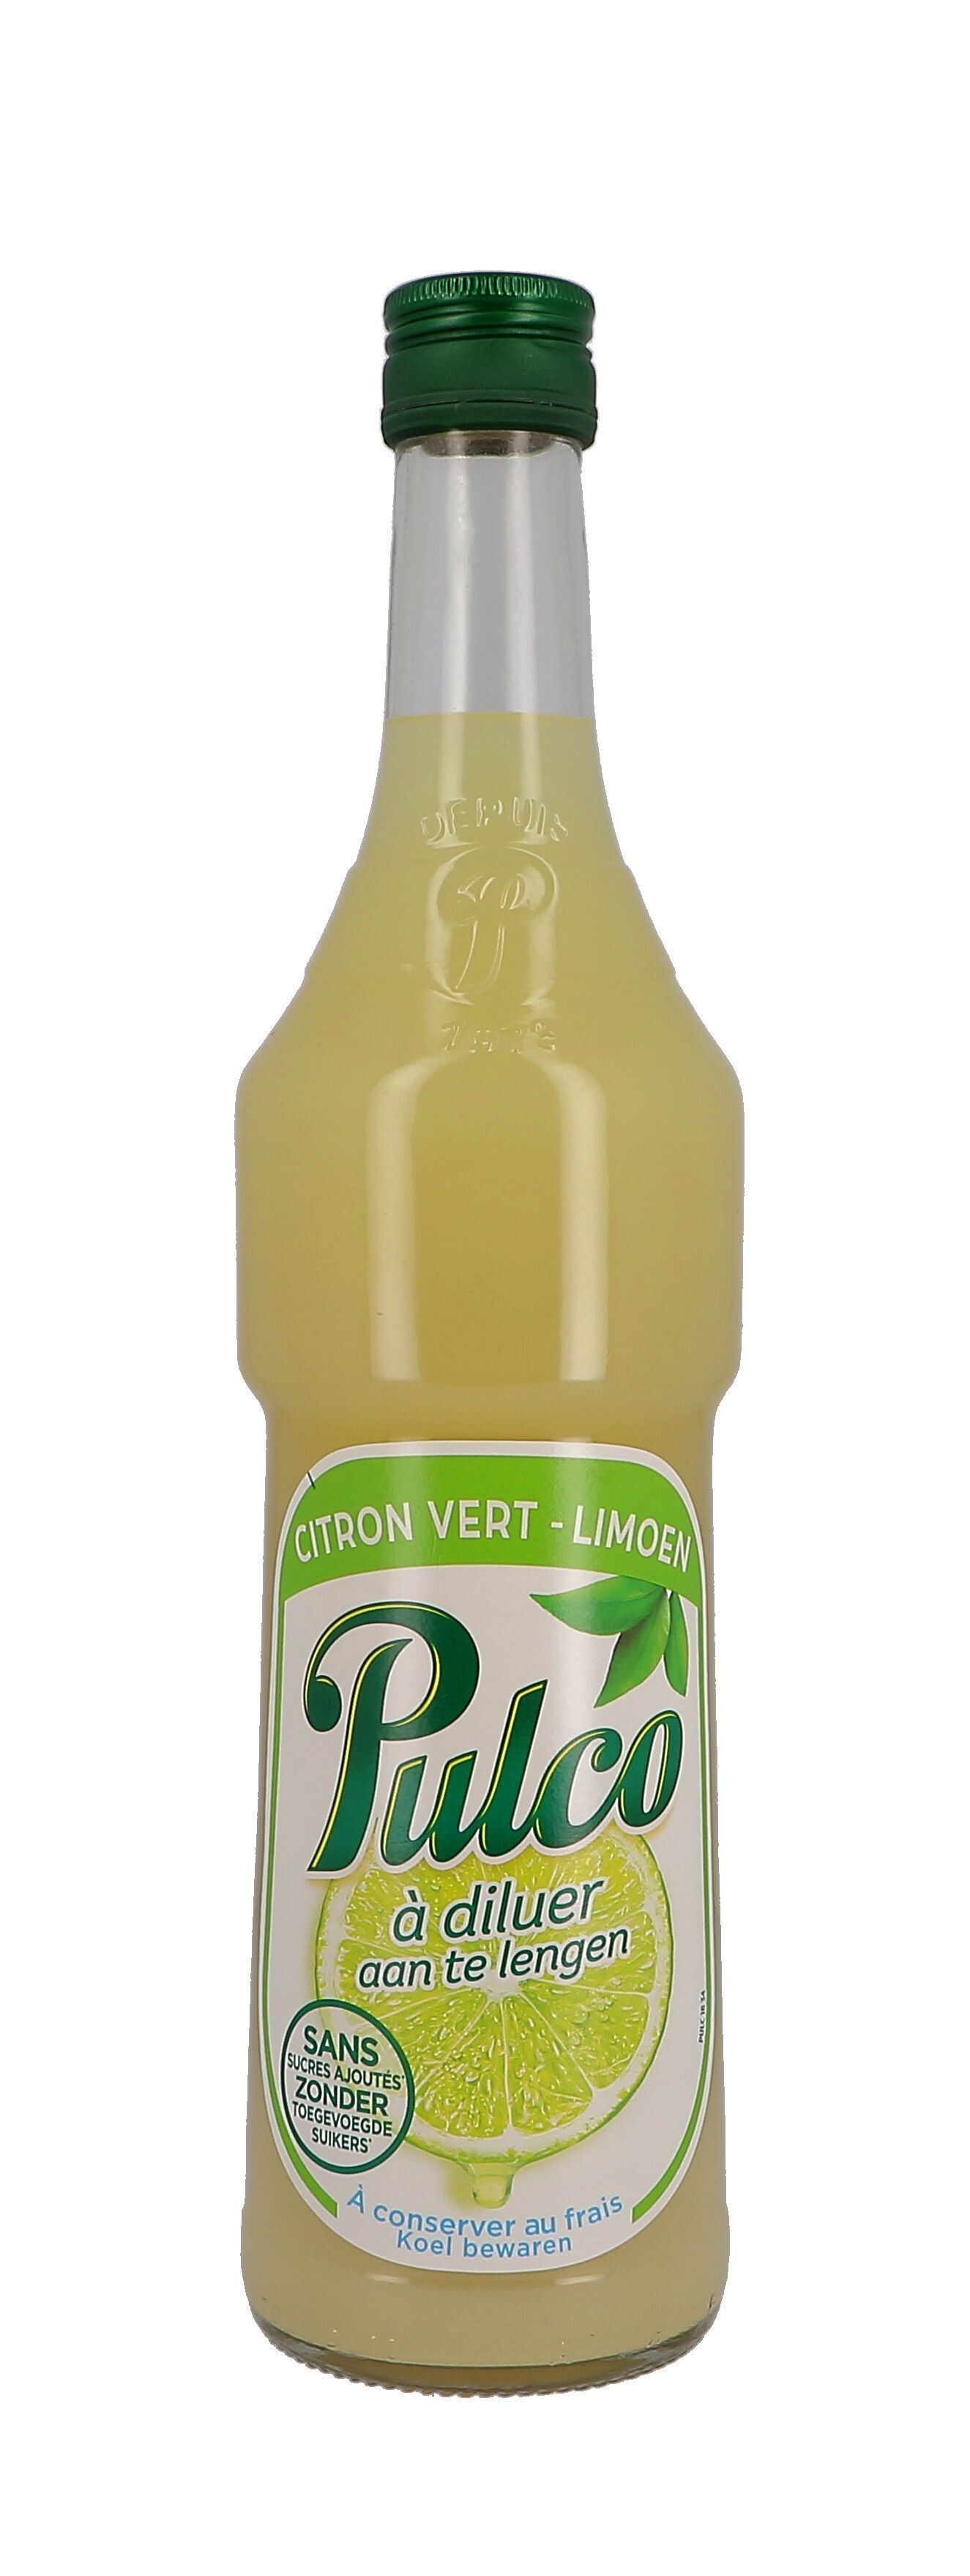 Pulco limoensap lemon vert 70cl 0%